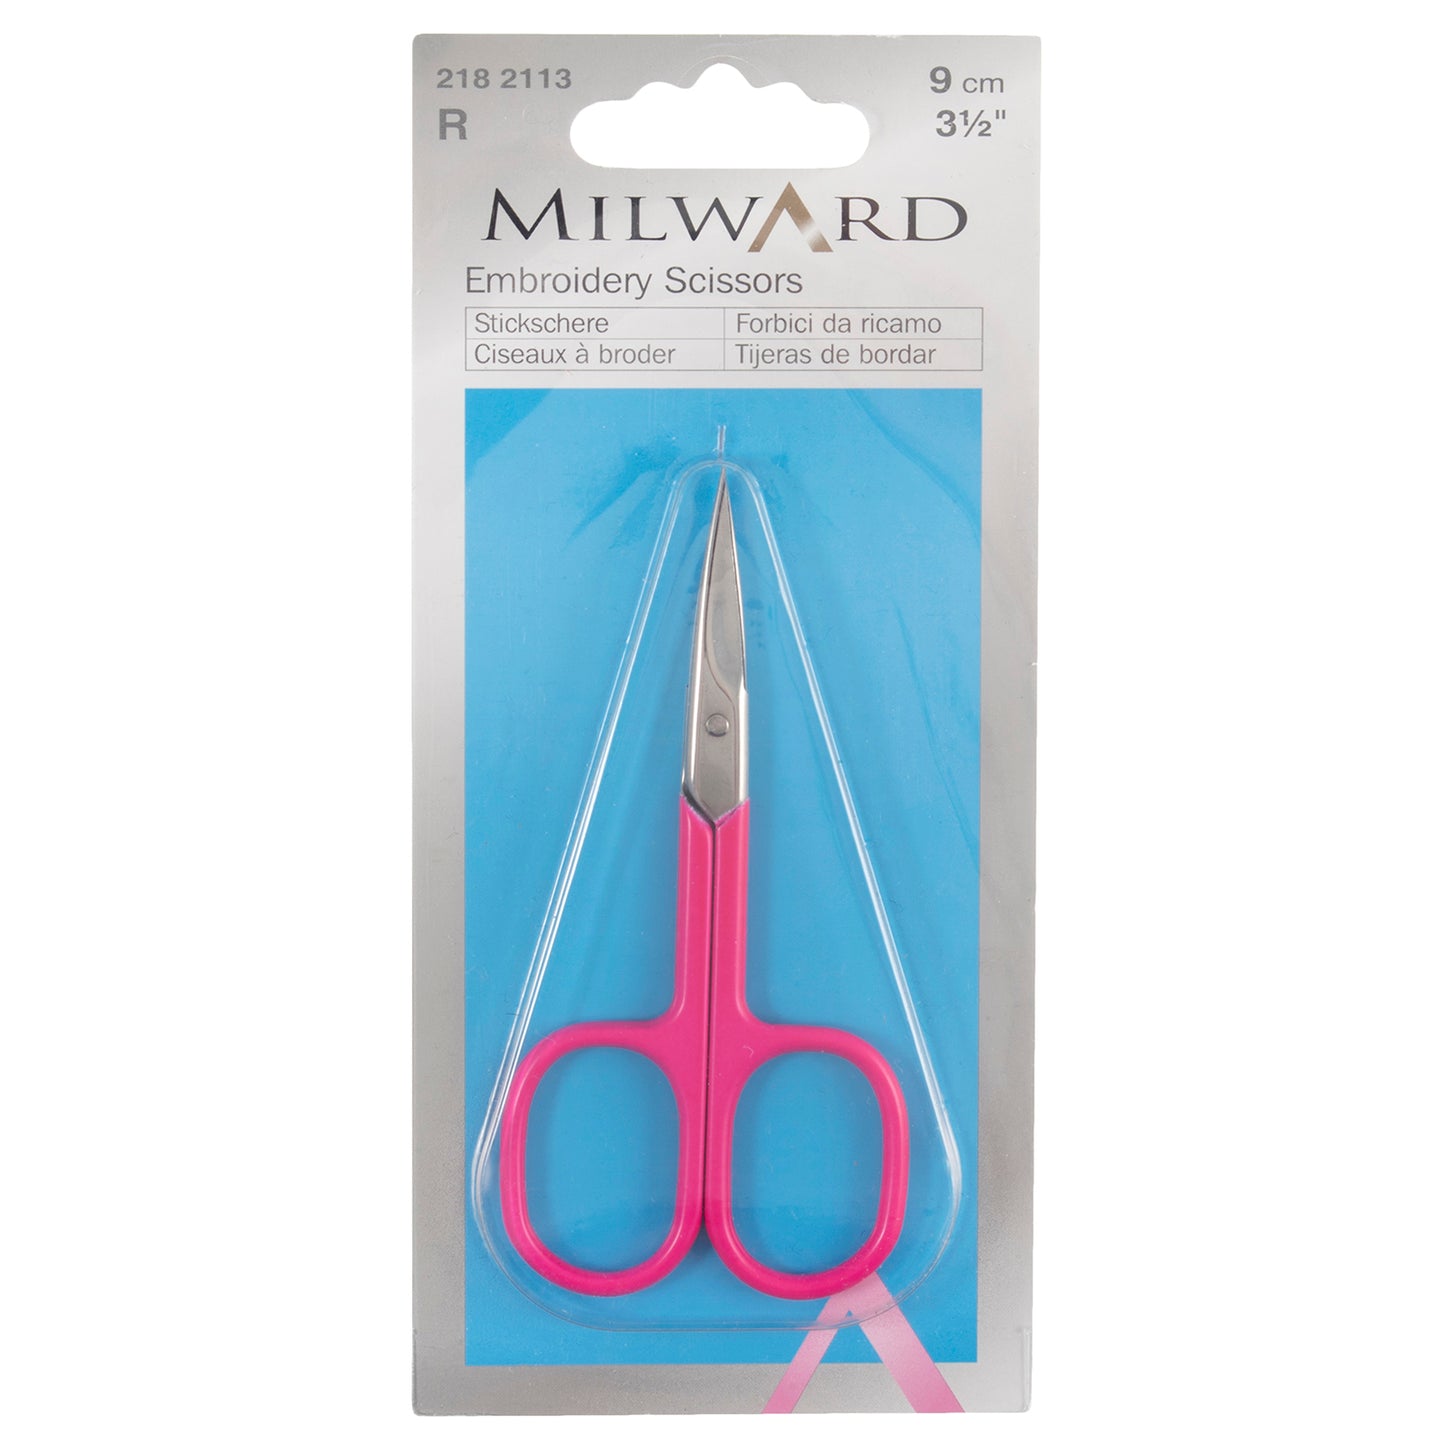 Neon Pink Scissors - Milward Embroidery